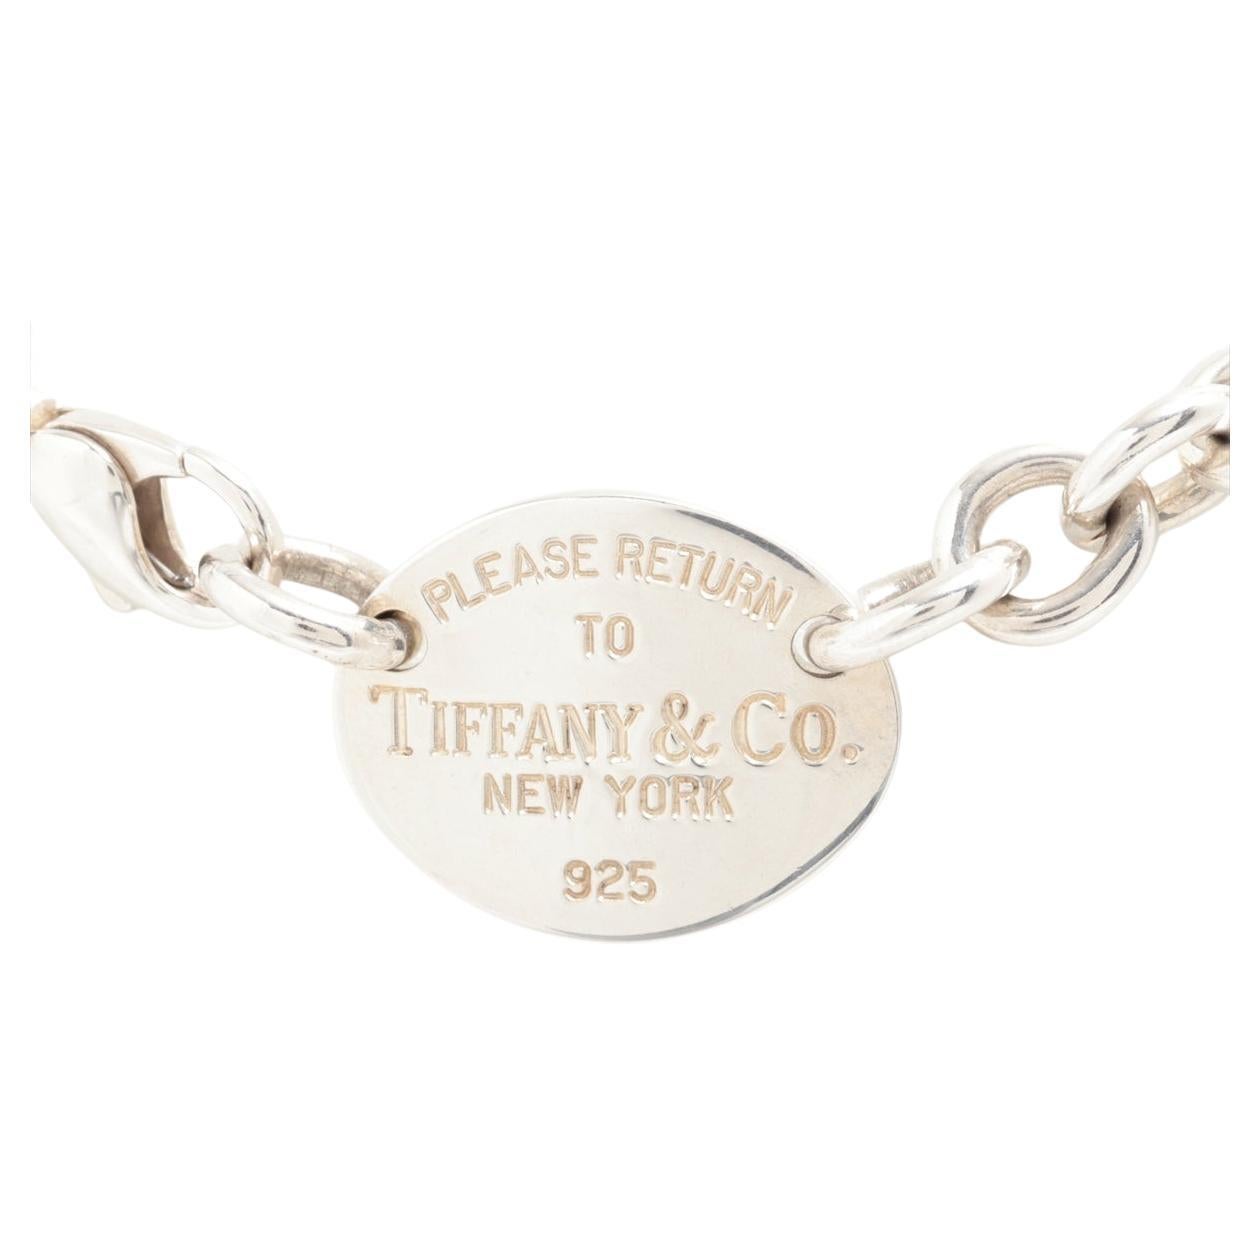 Tiffany & Co. Return To Tiffany Oval Tag Necklace Silver